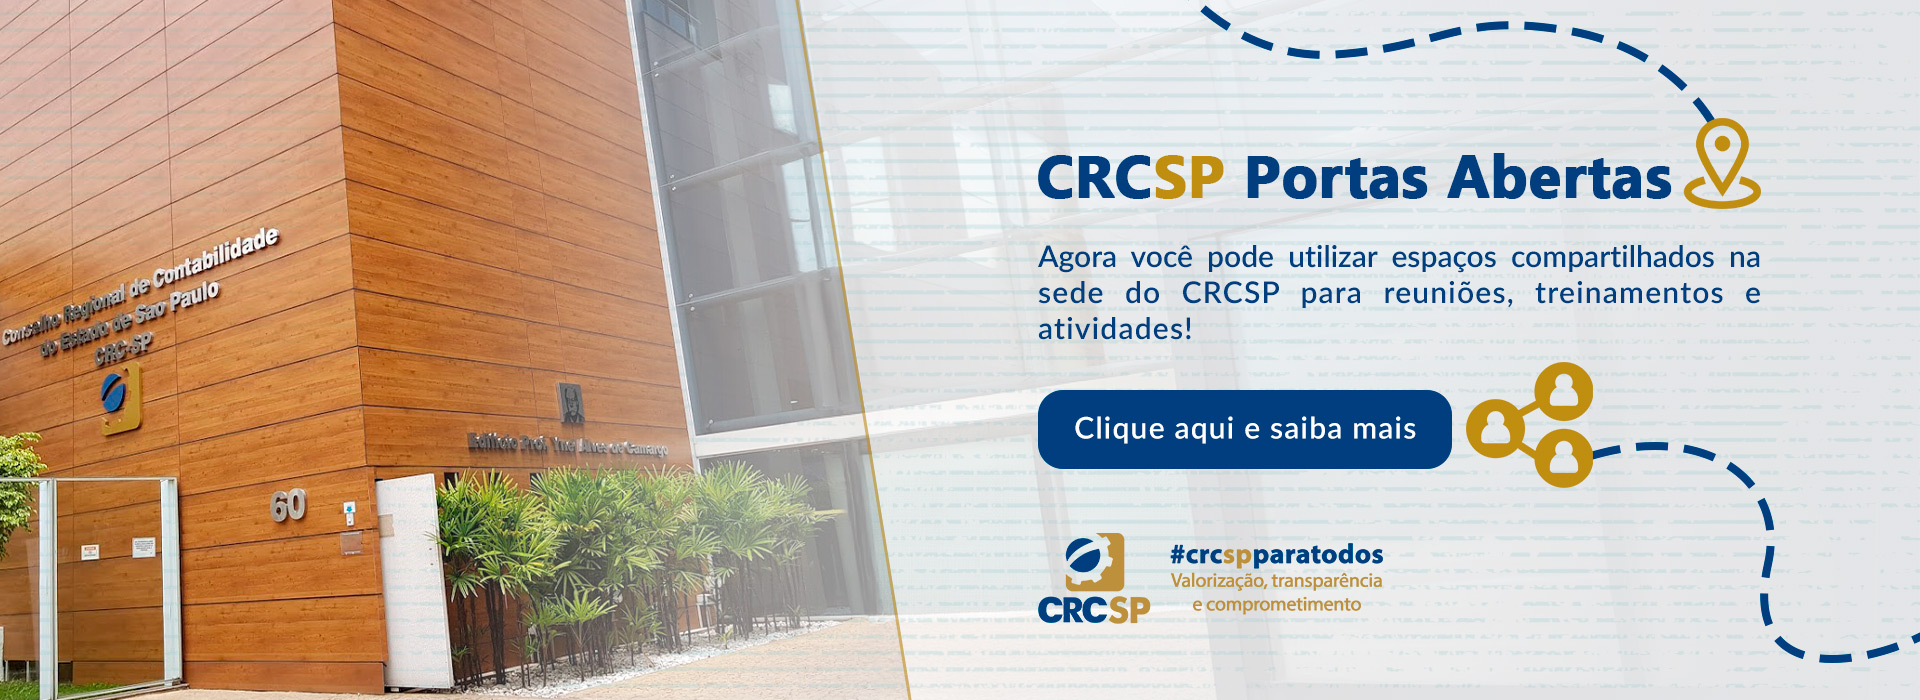 CRCSP Portas Abertas